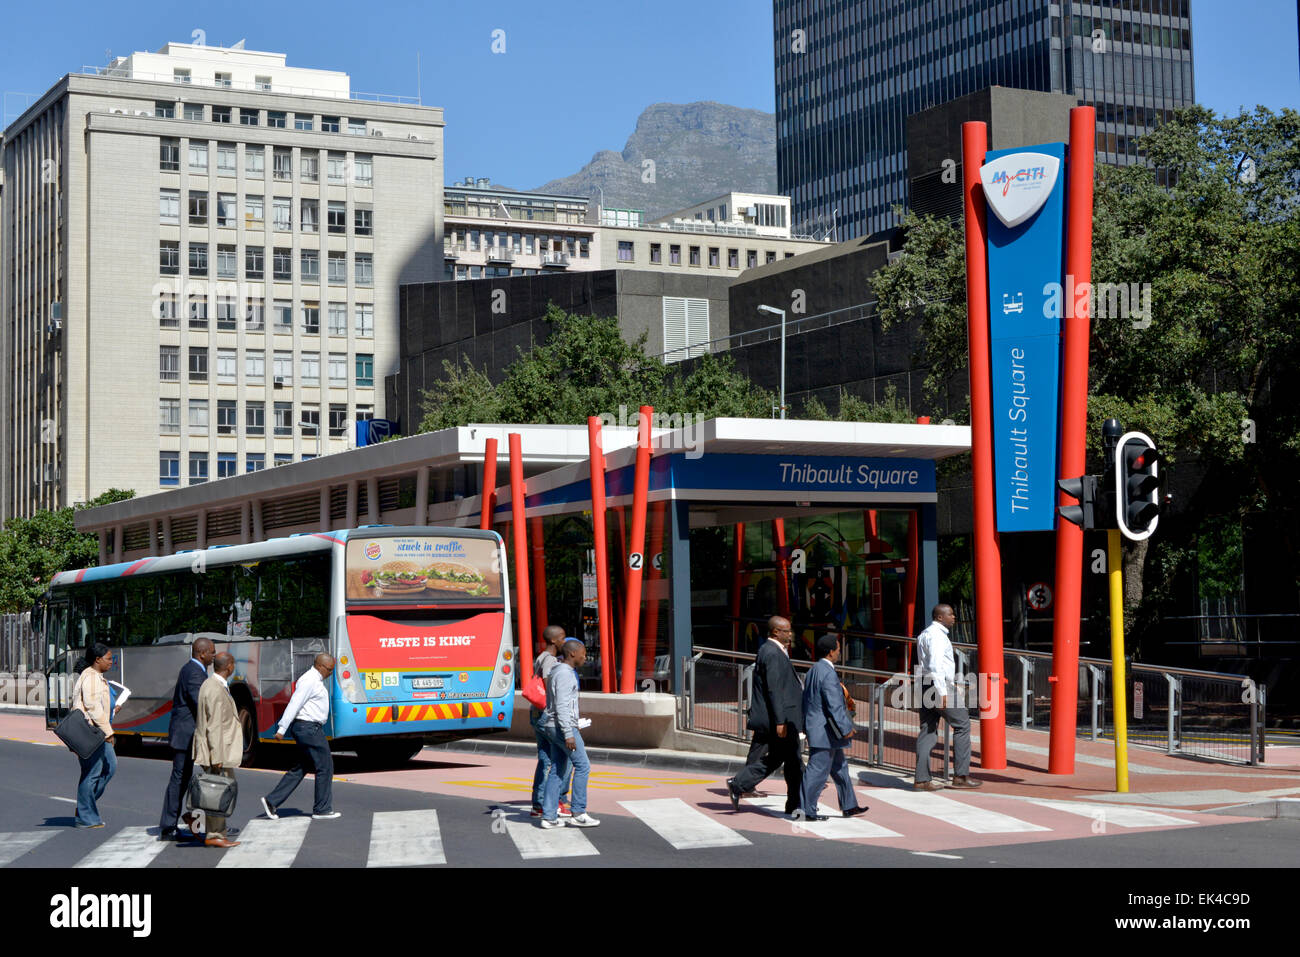 MyCiti Bus. Thibault Square, Cape Town. Foto de stock